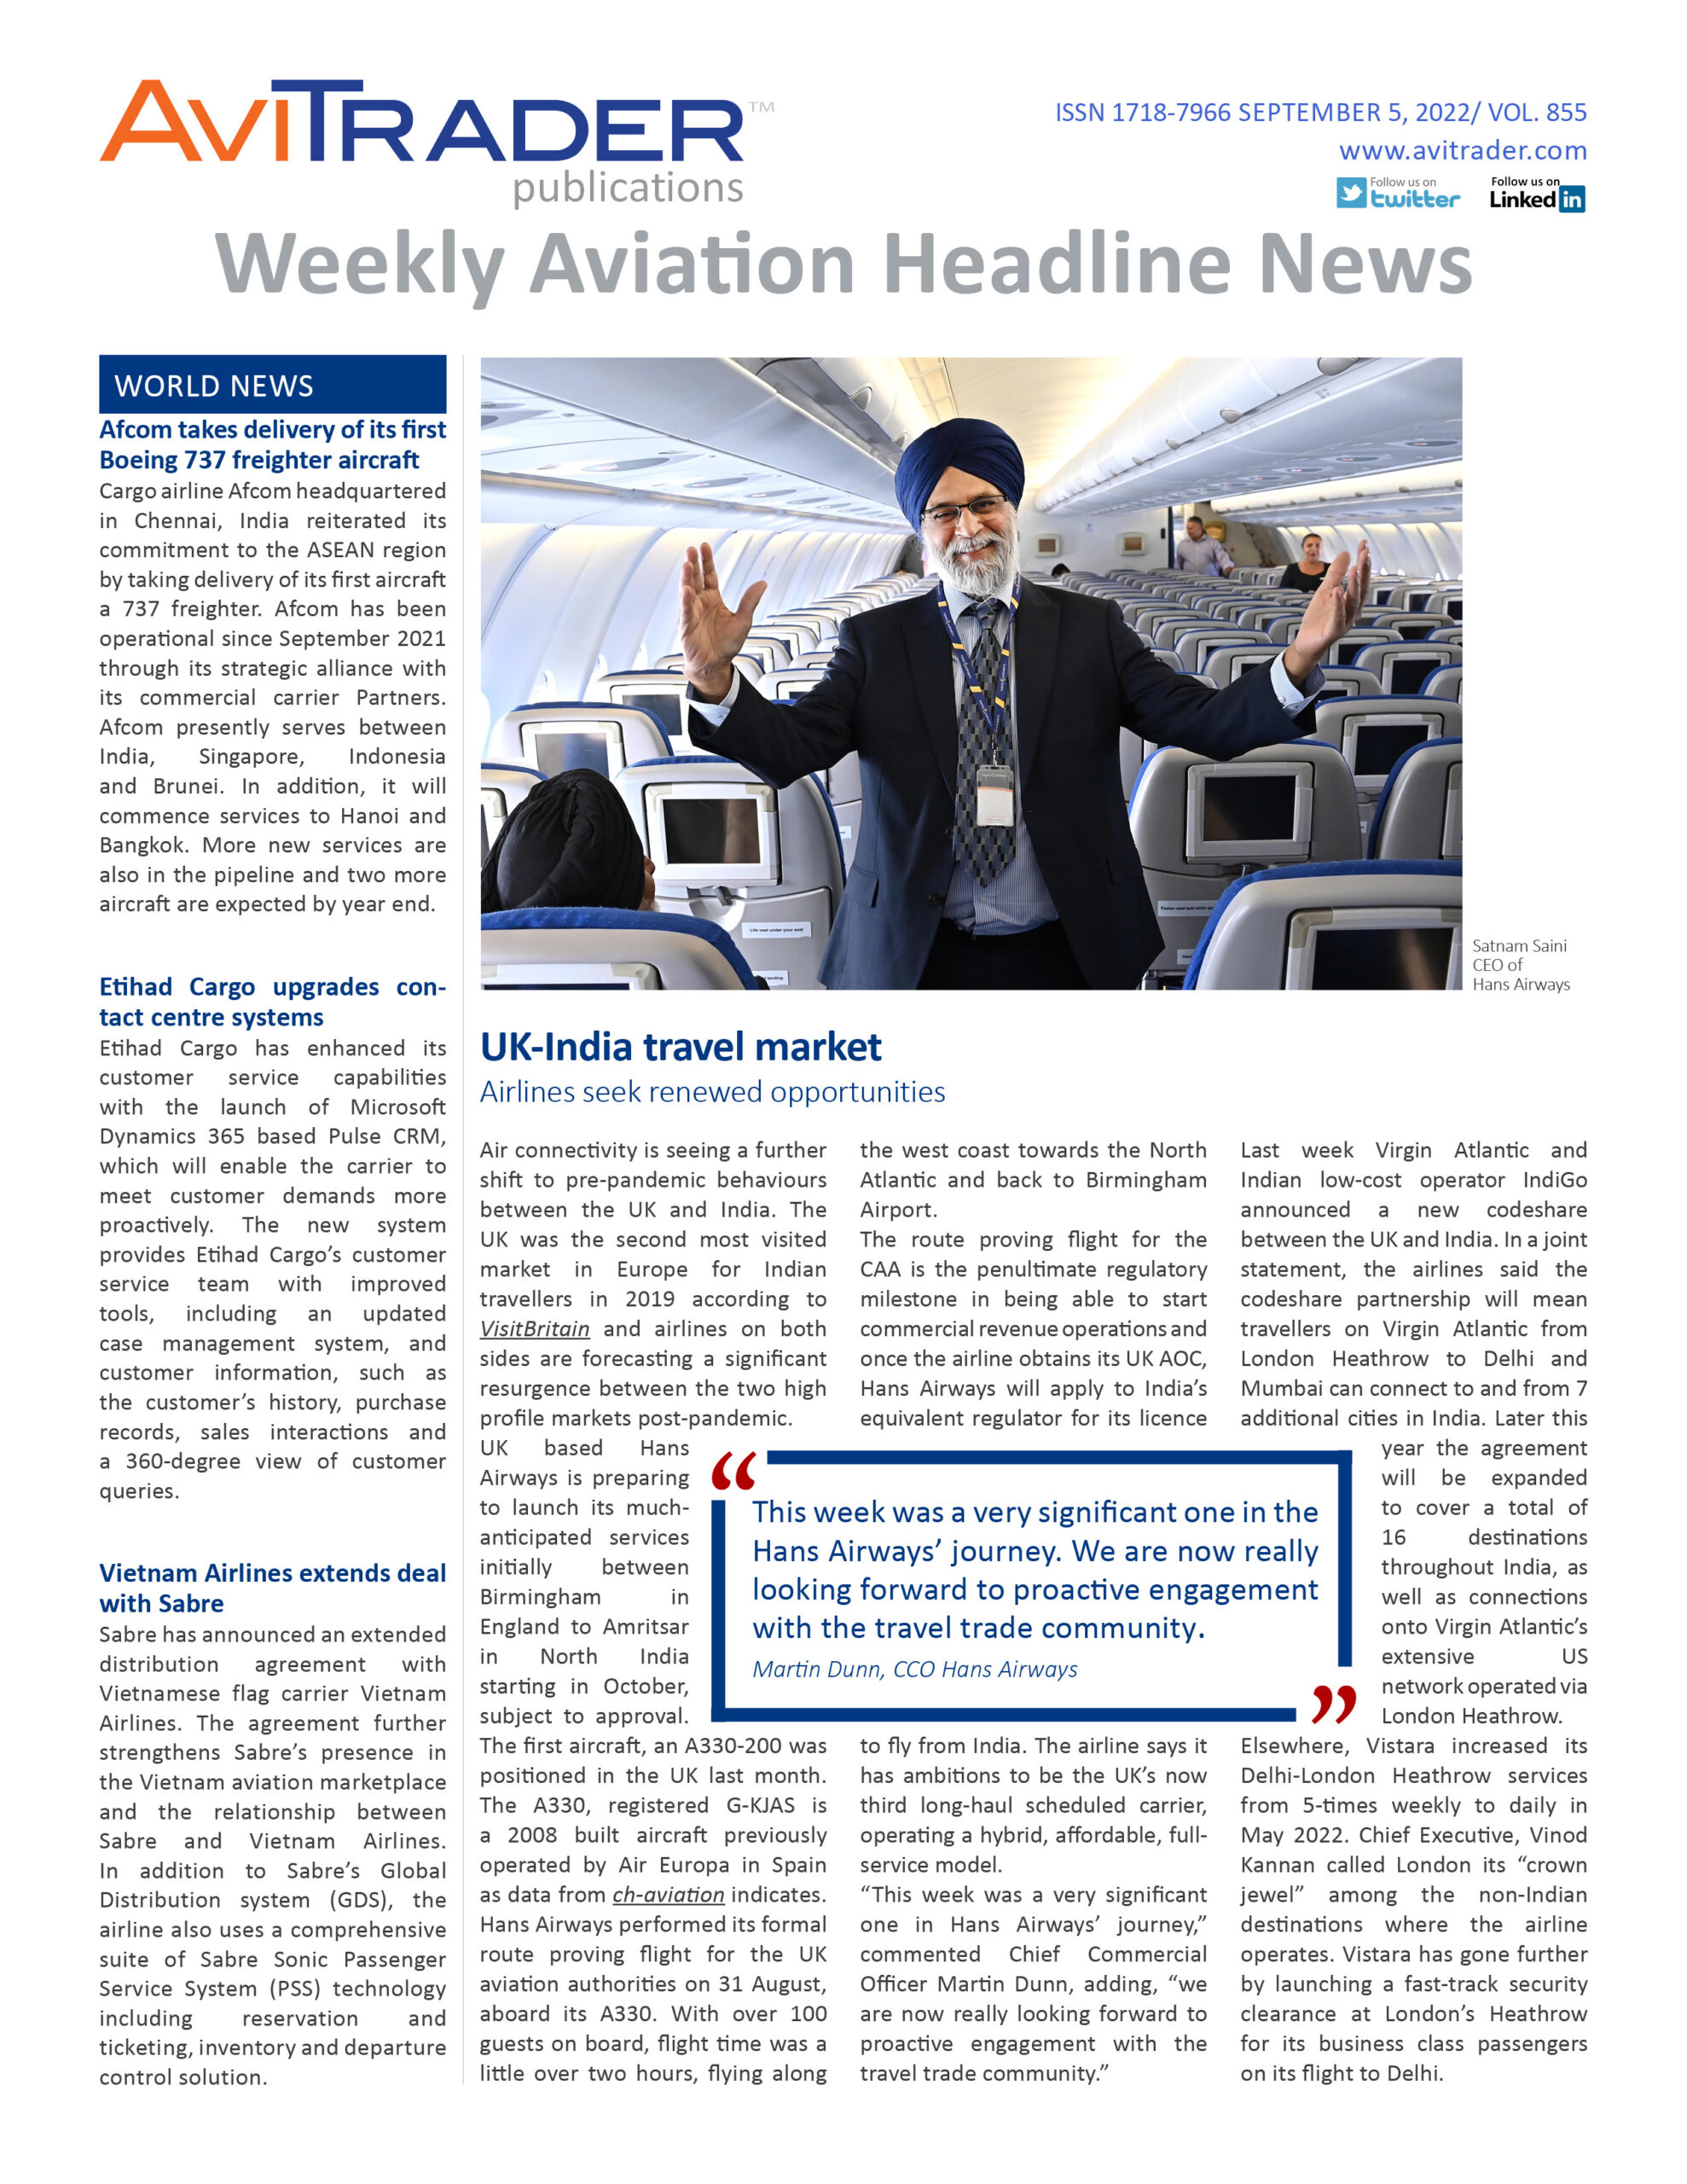 AviTrader_Weekly_Headline_News_Cover_2022-09-05